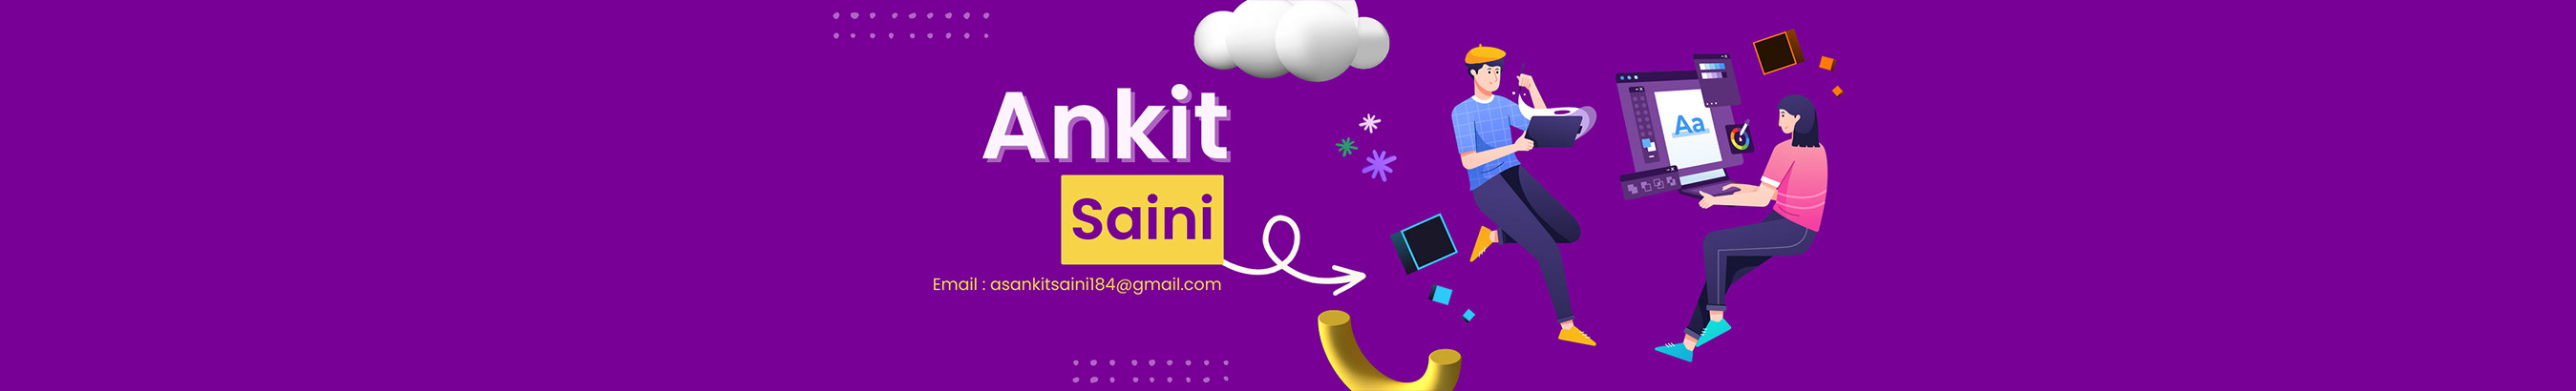 Ankit Saini のプロファイルバナー